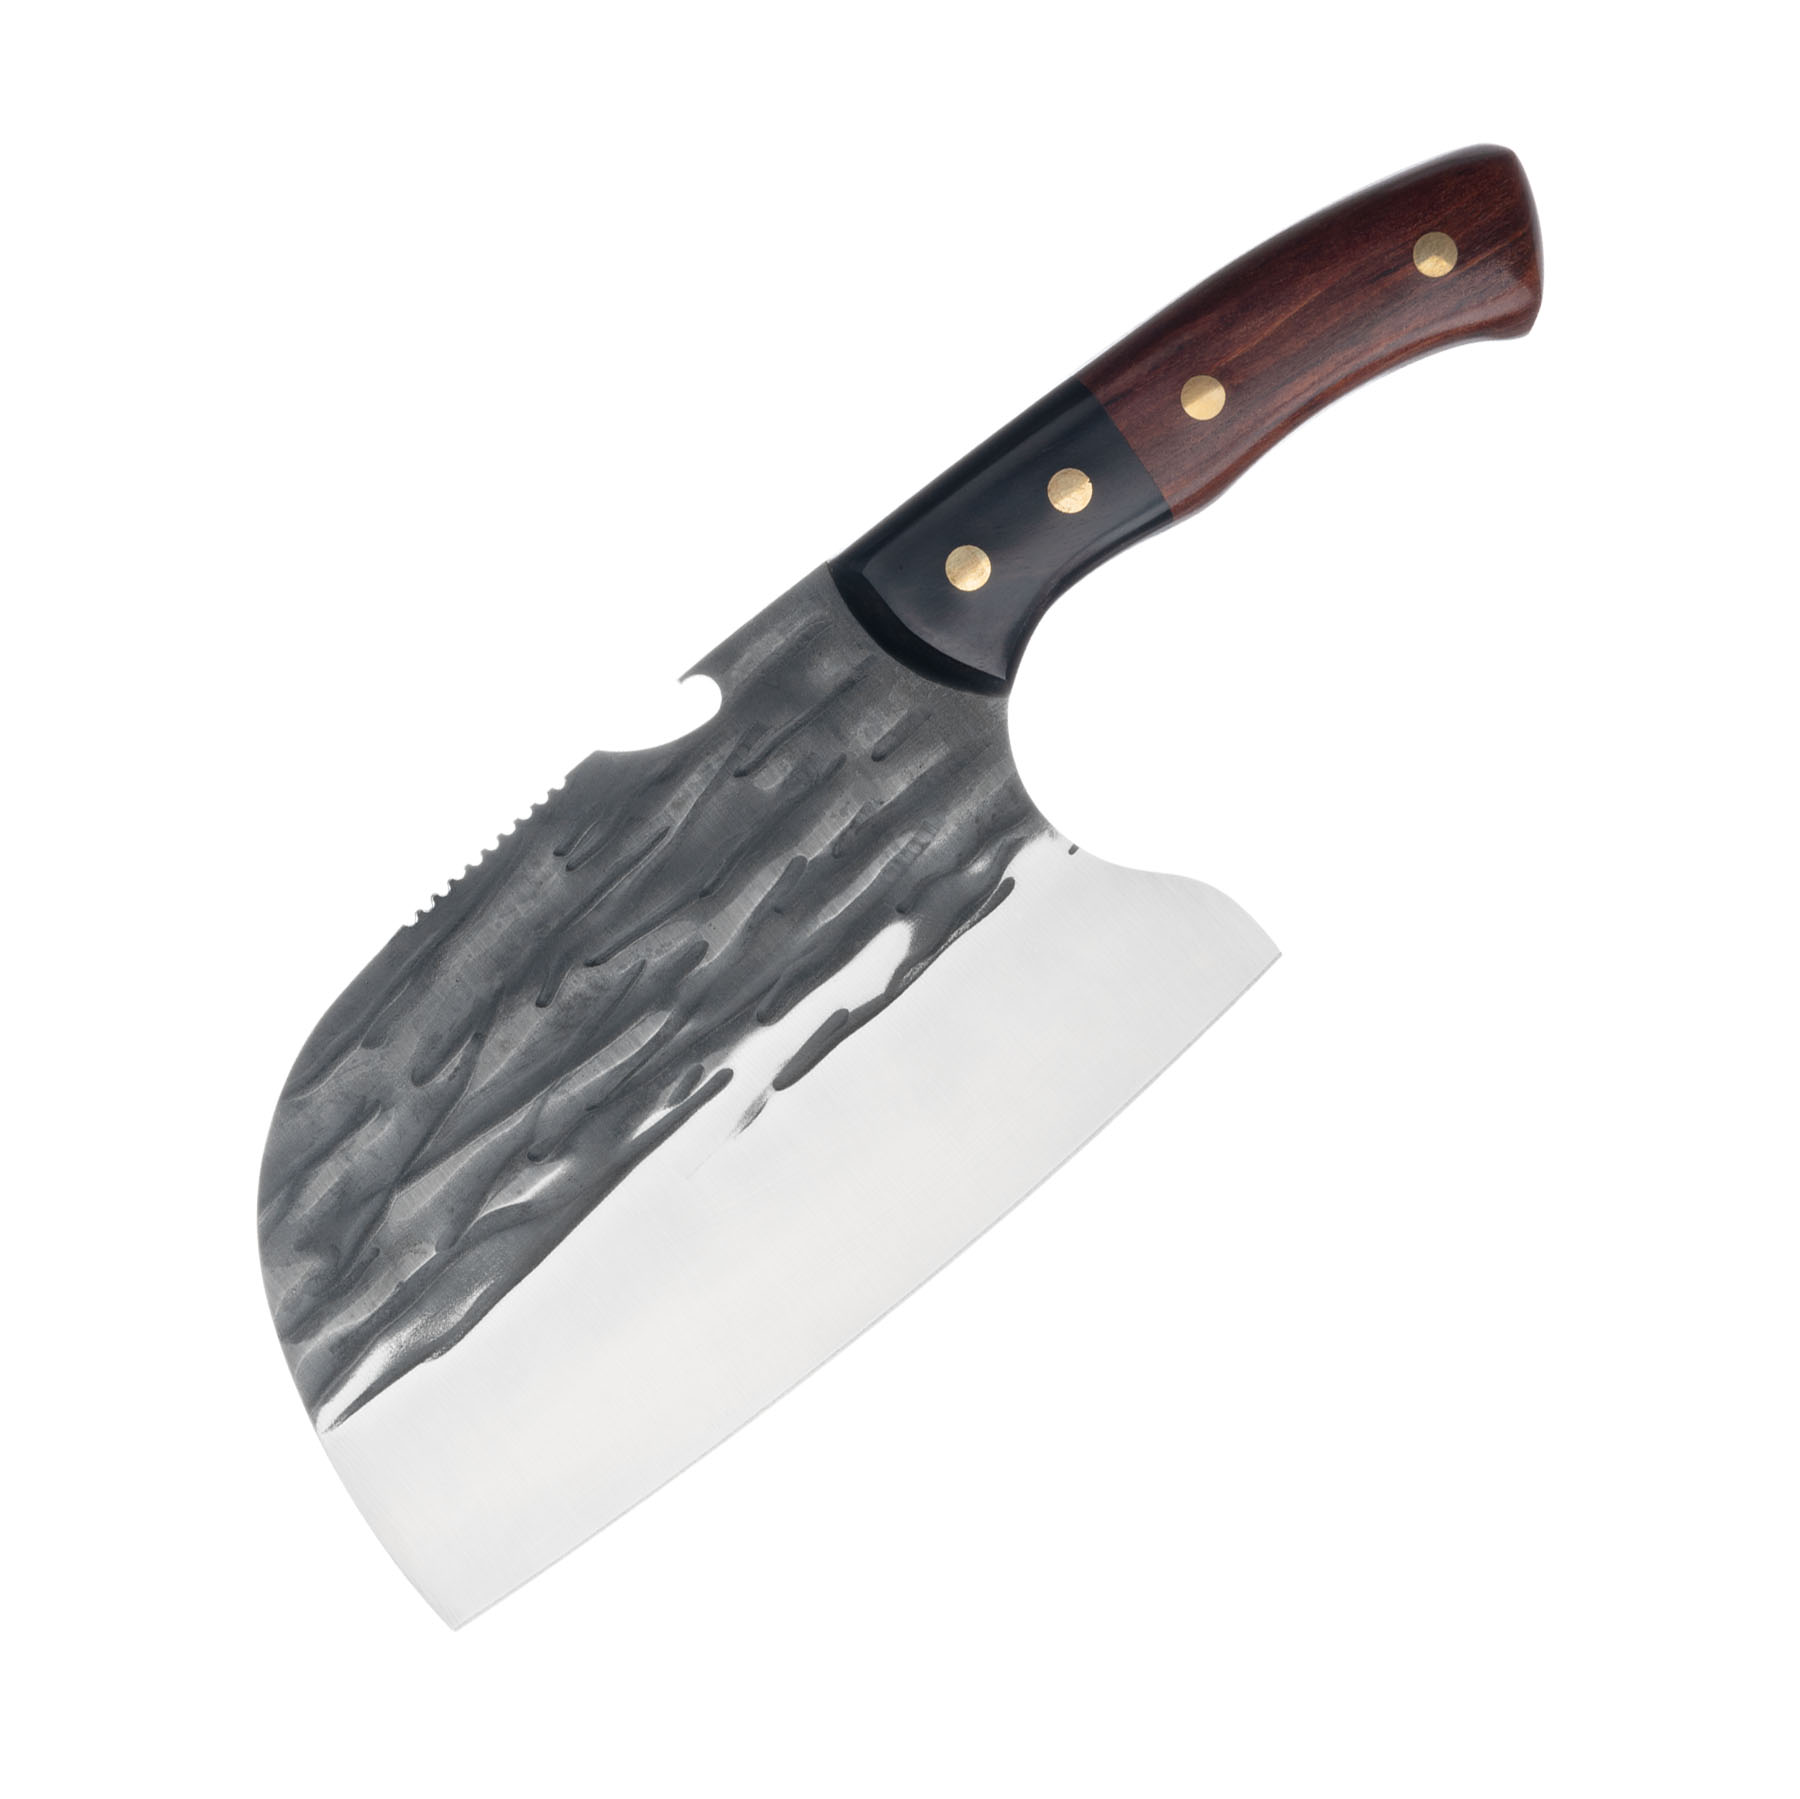 6 Inch Butcher Knife